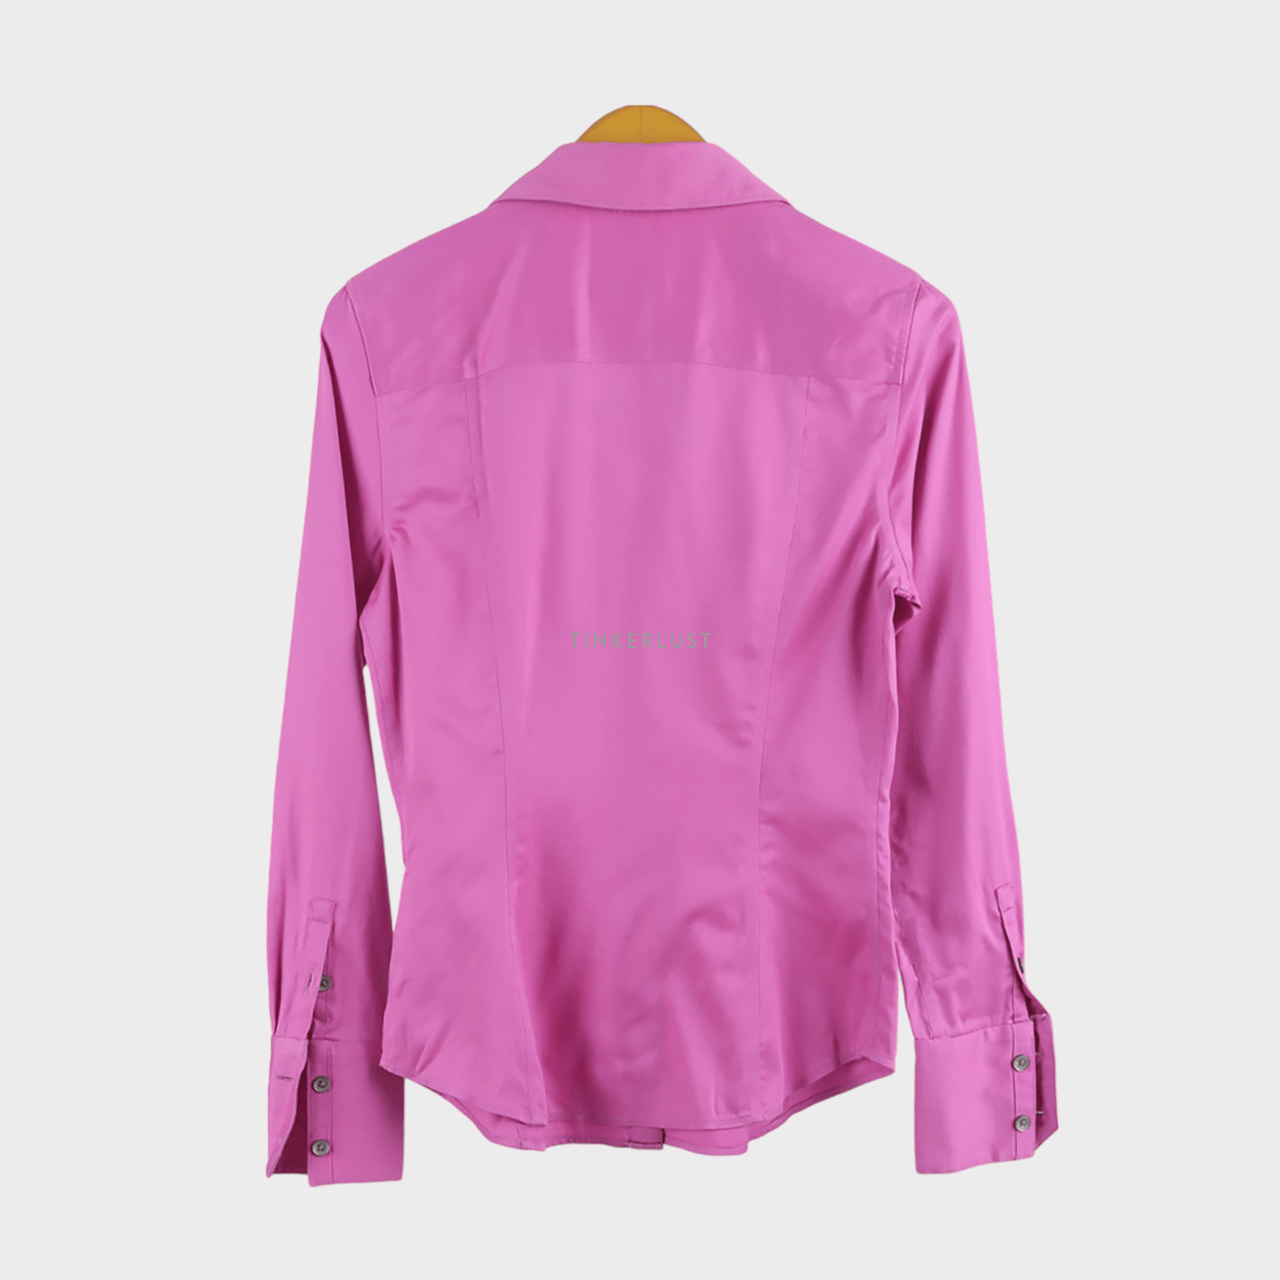 Calvin Klein V Neck Pink Shirt